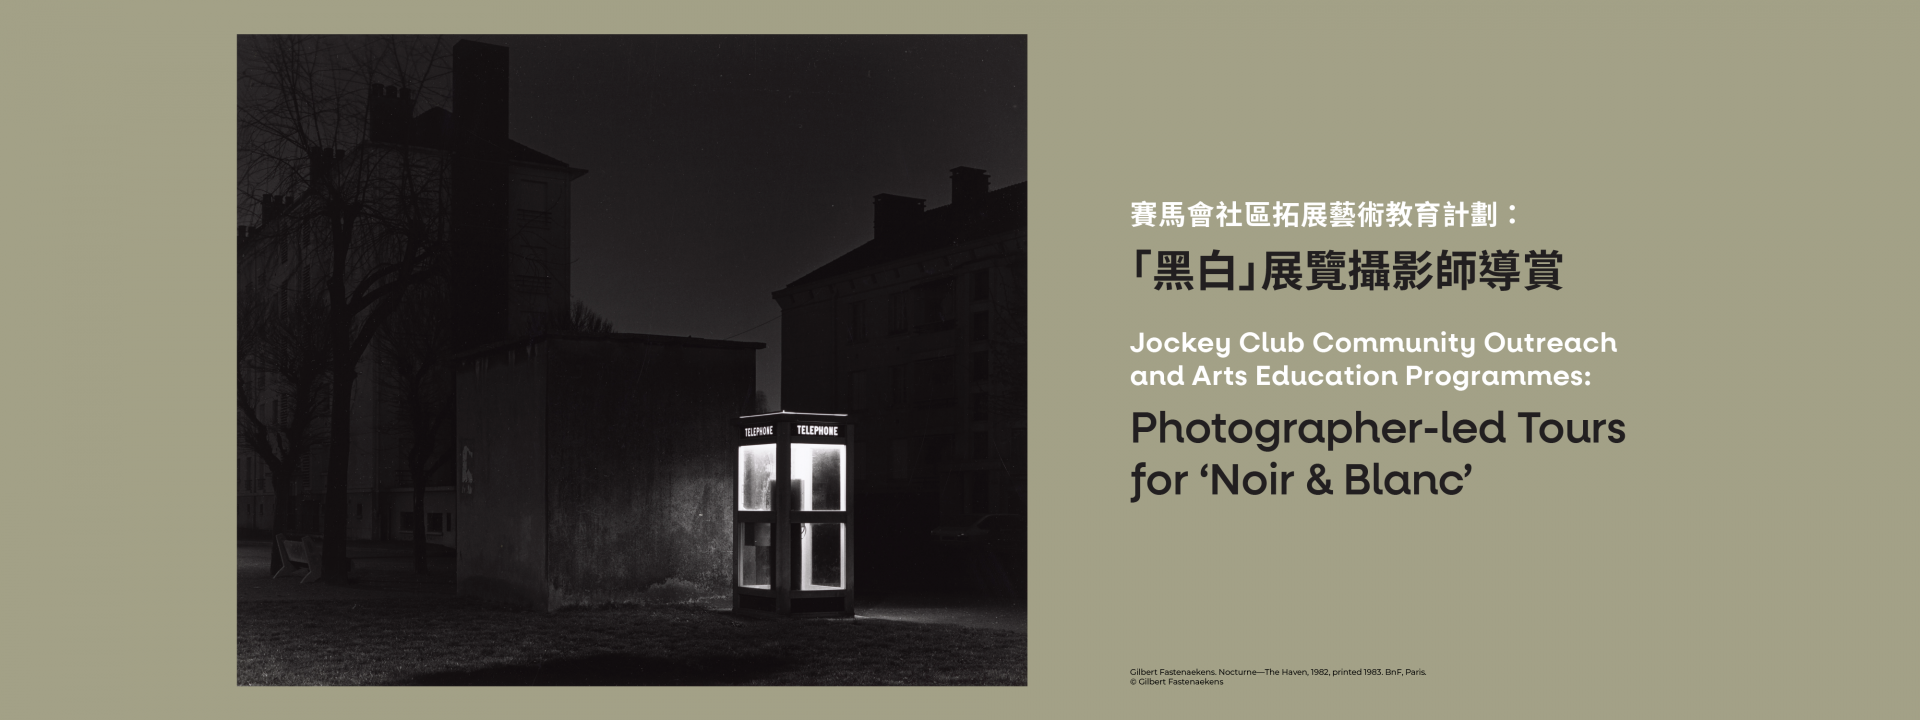  Jockey Club Community Outreach and Arts Education Programmes: Photographer-led Tours for 'Noir & Blanc'